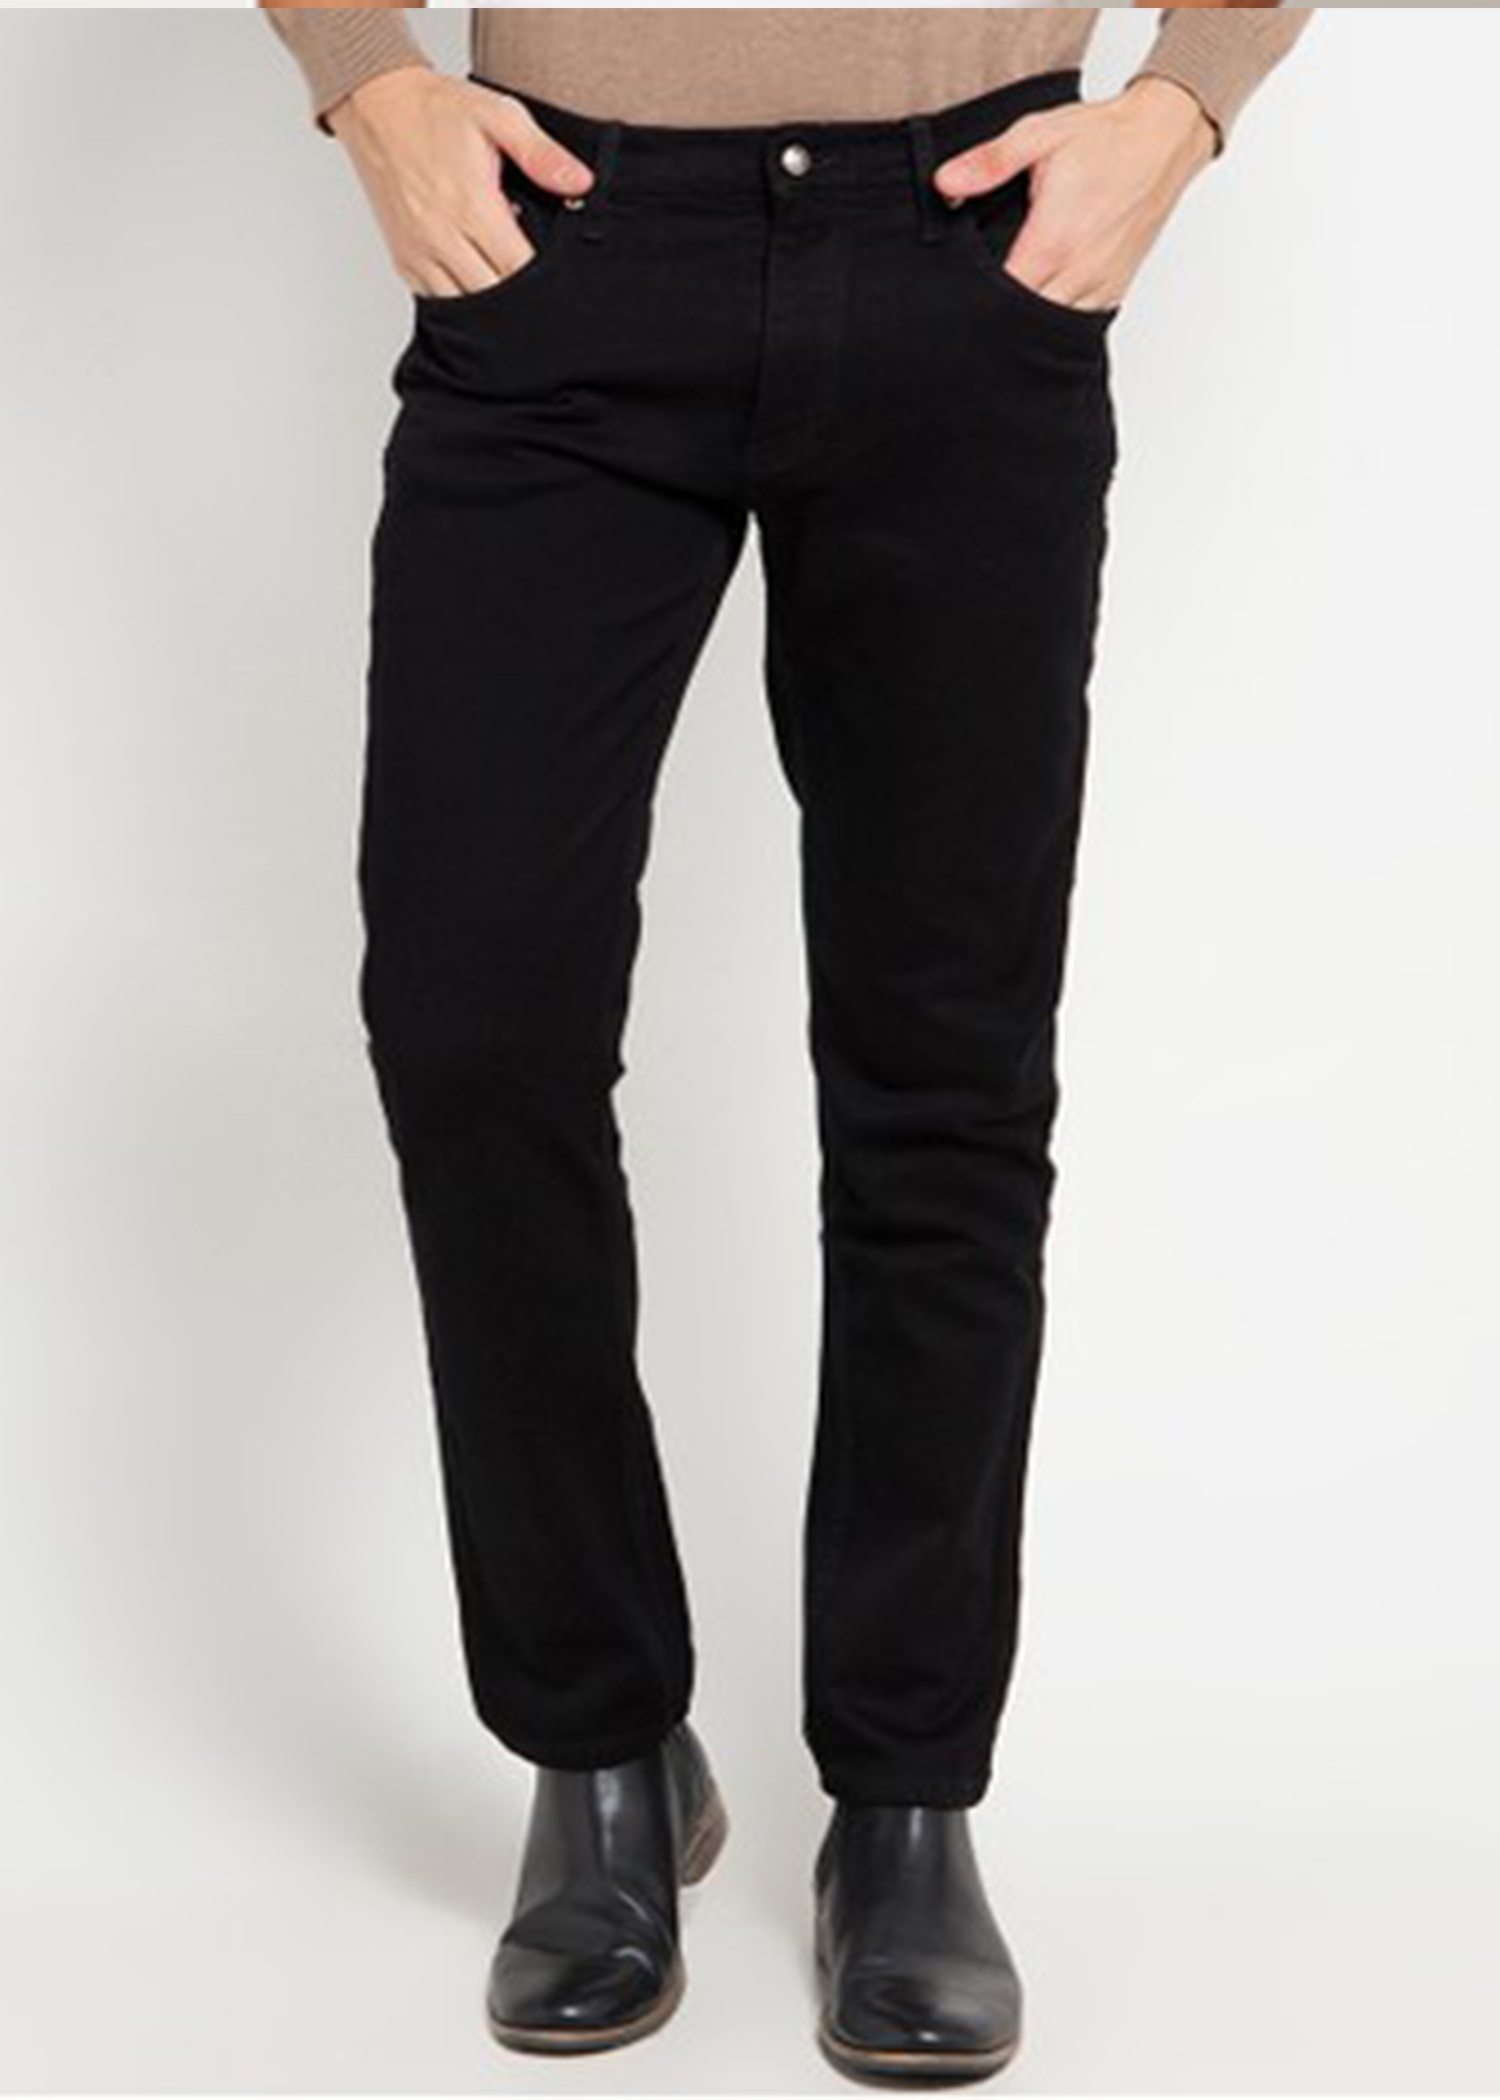 Crown Tailor - Jeans Pant